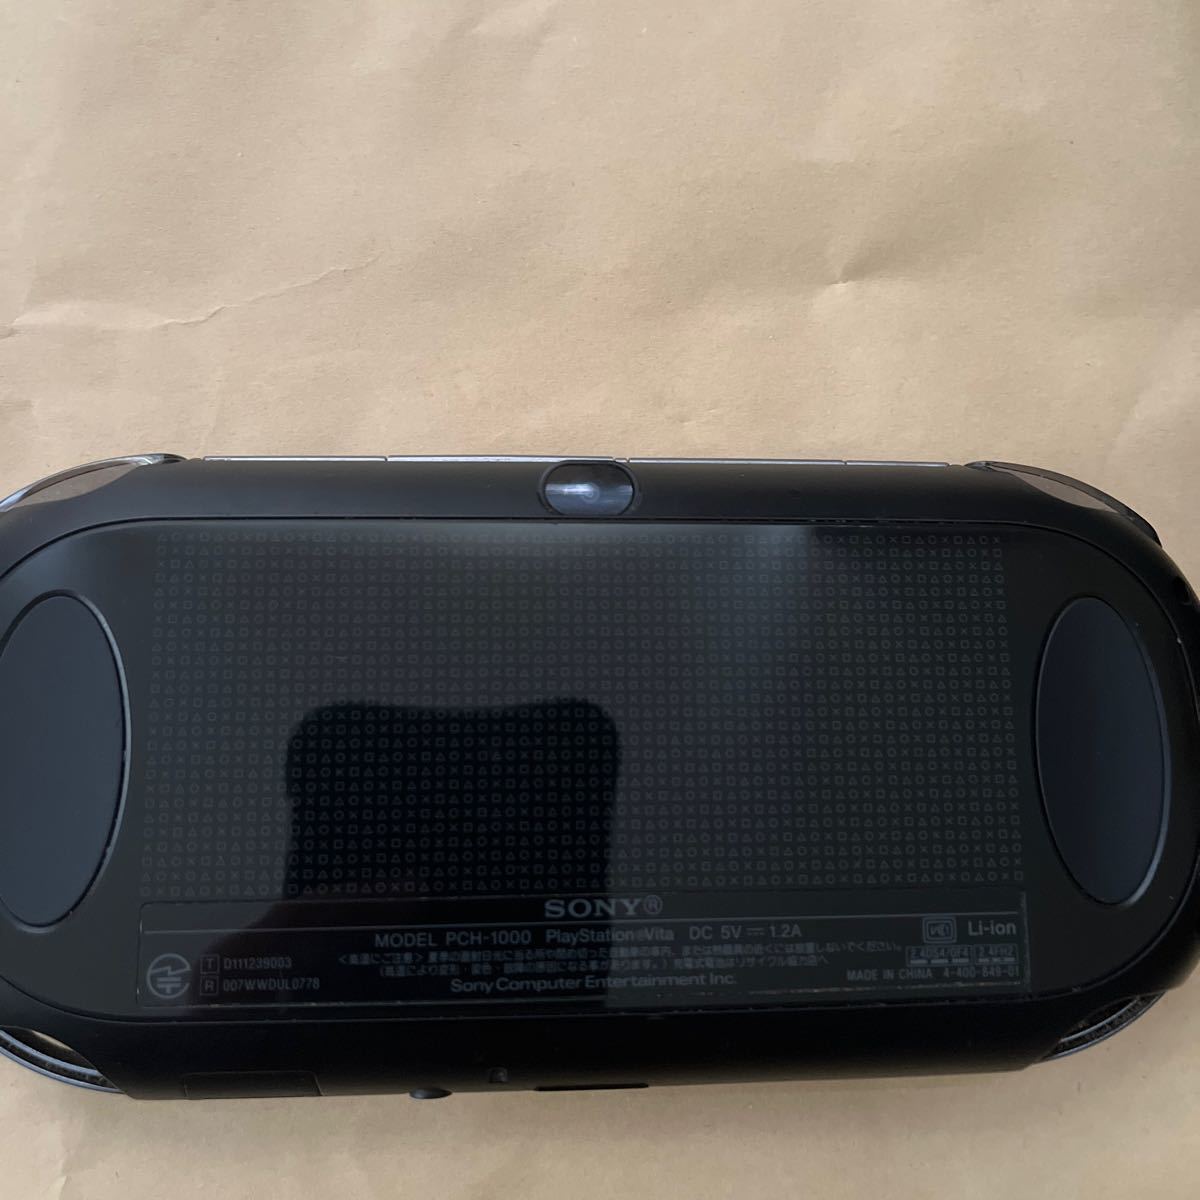  PS Vita ブラック+充電器　　箱、説明書無し　　　　　+ メモリーカード3つ(4g×1,8g×1,16g×1)